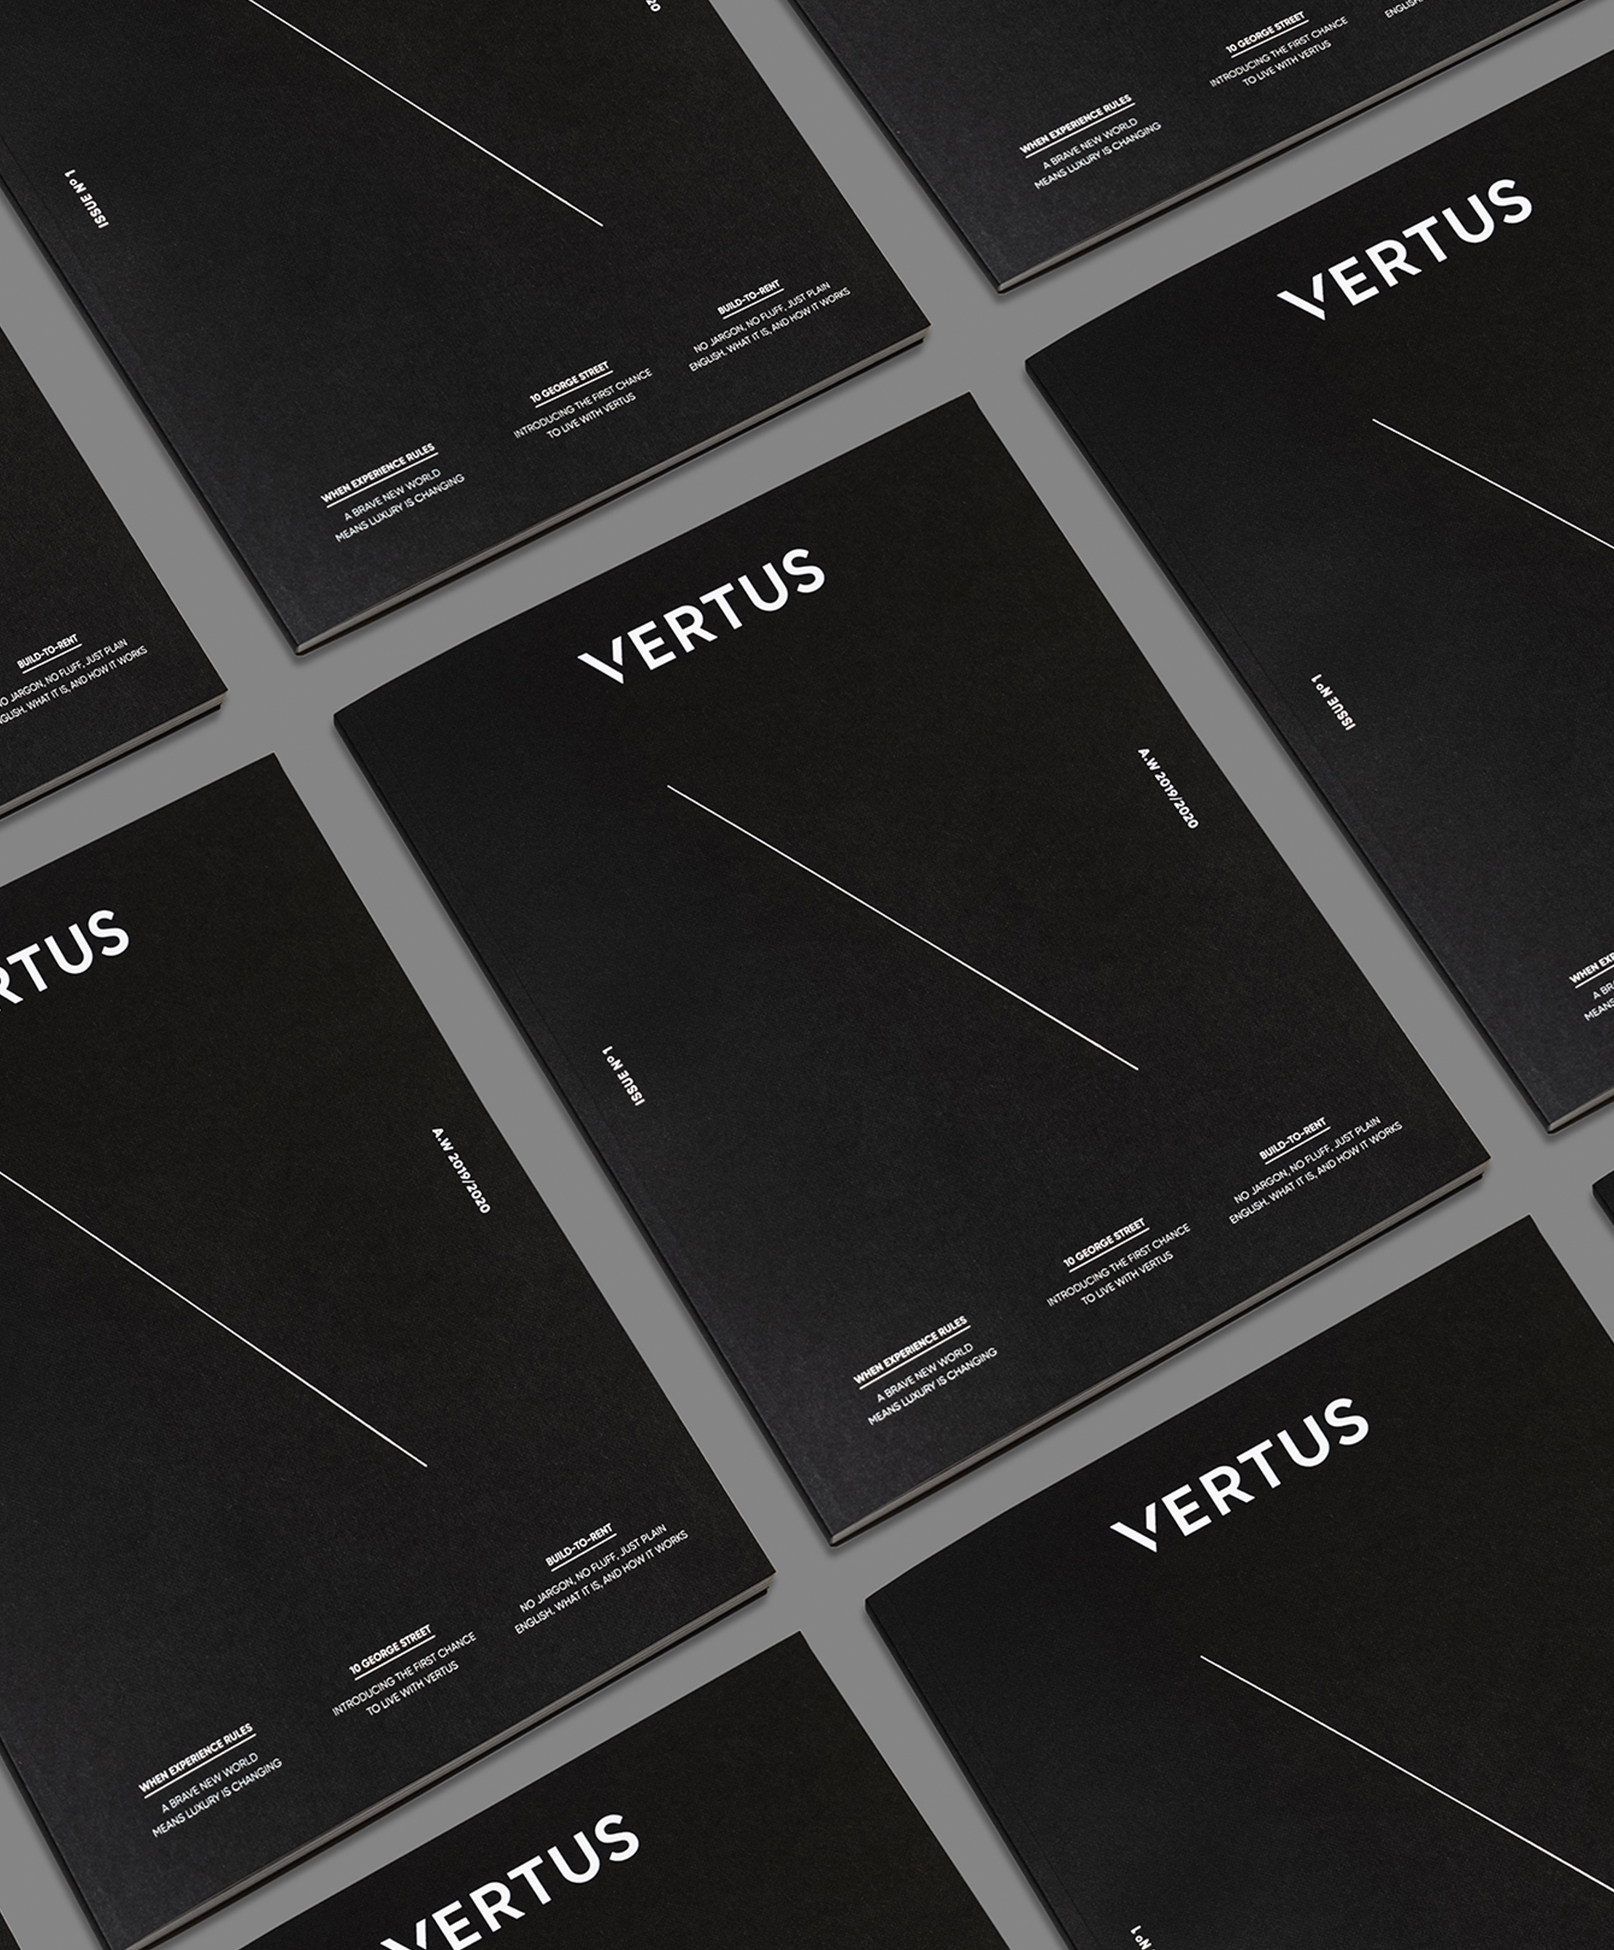 Vertus Magazine